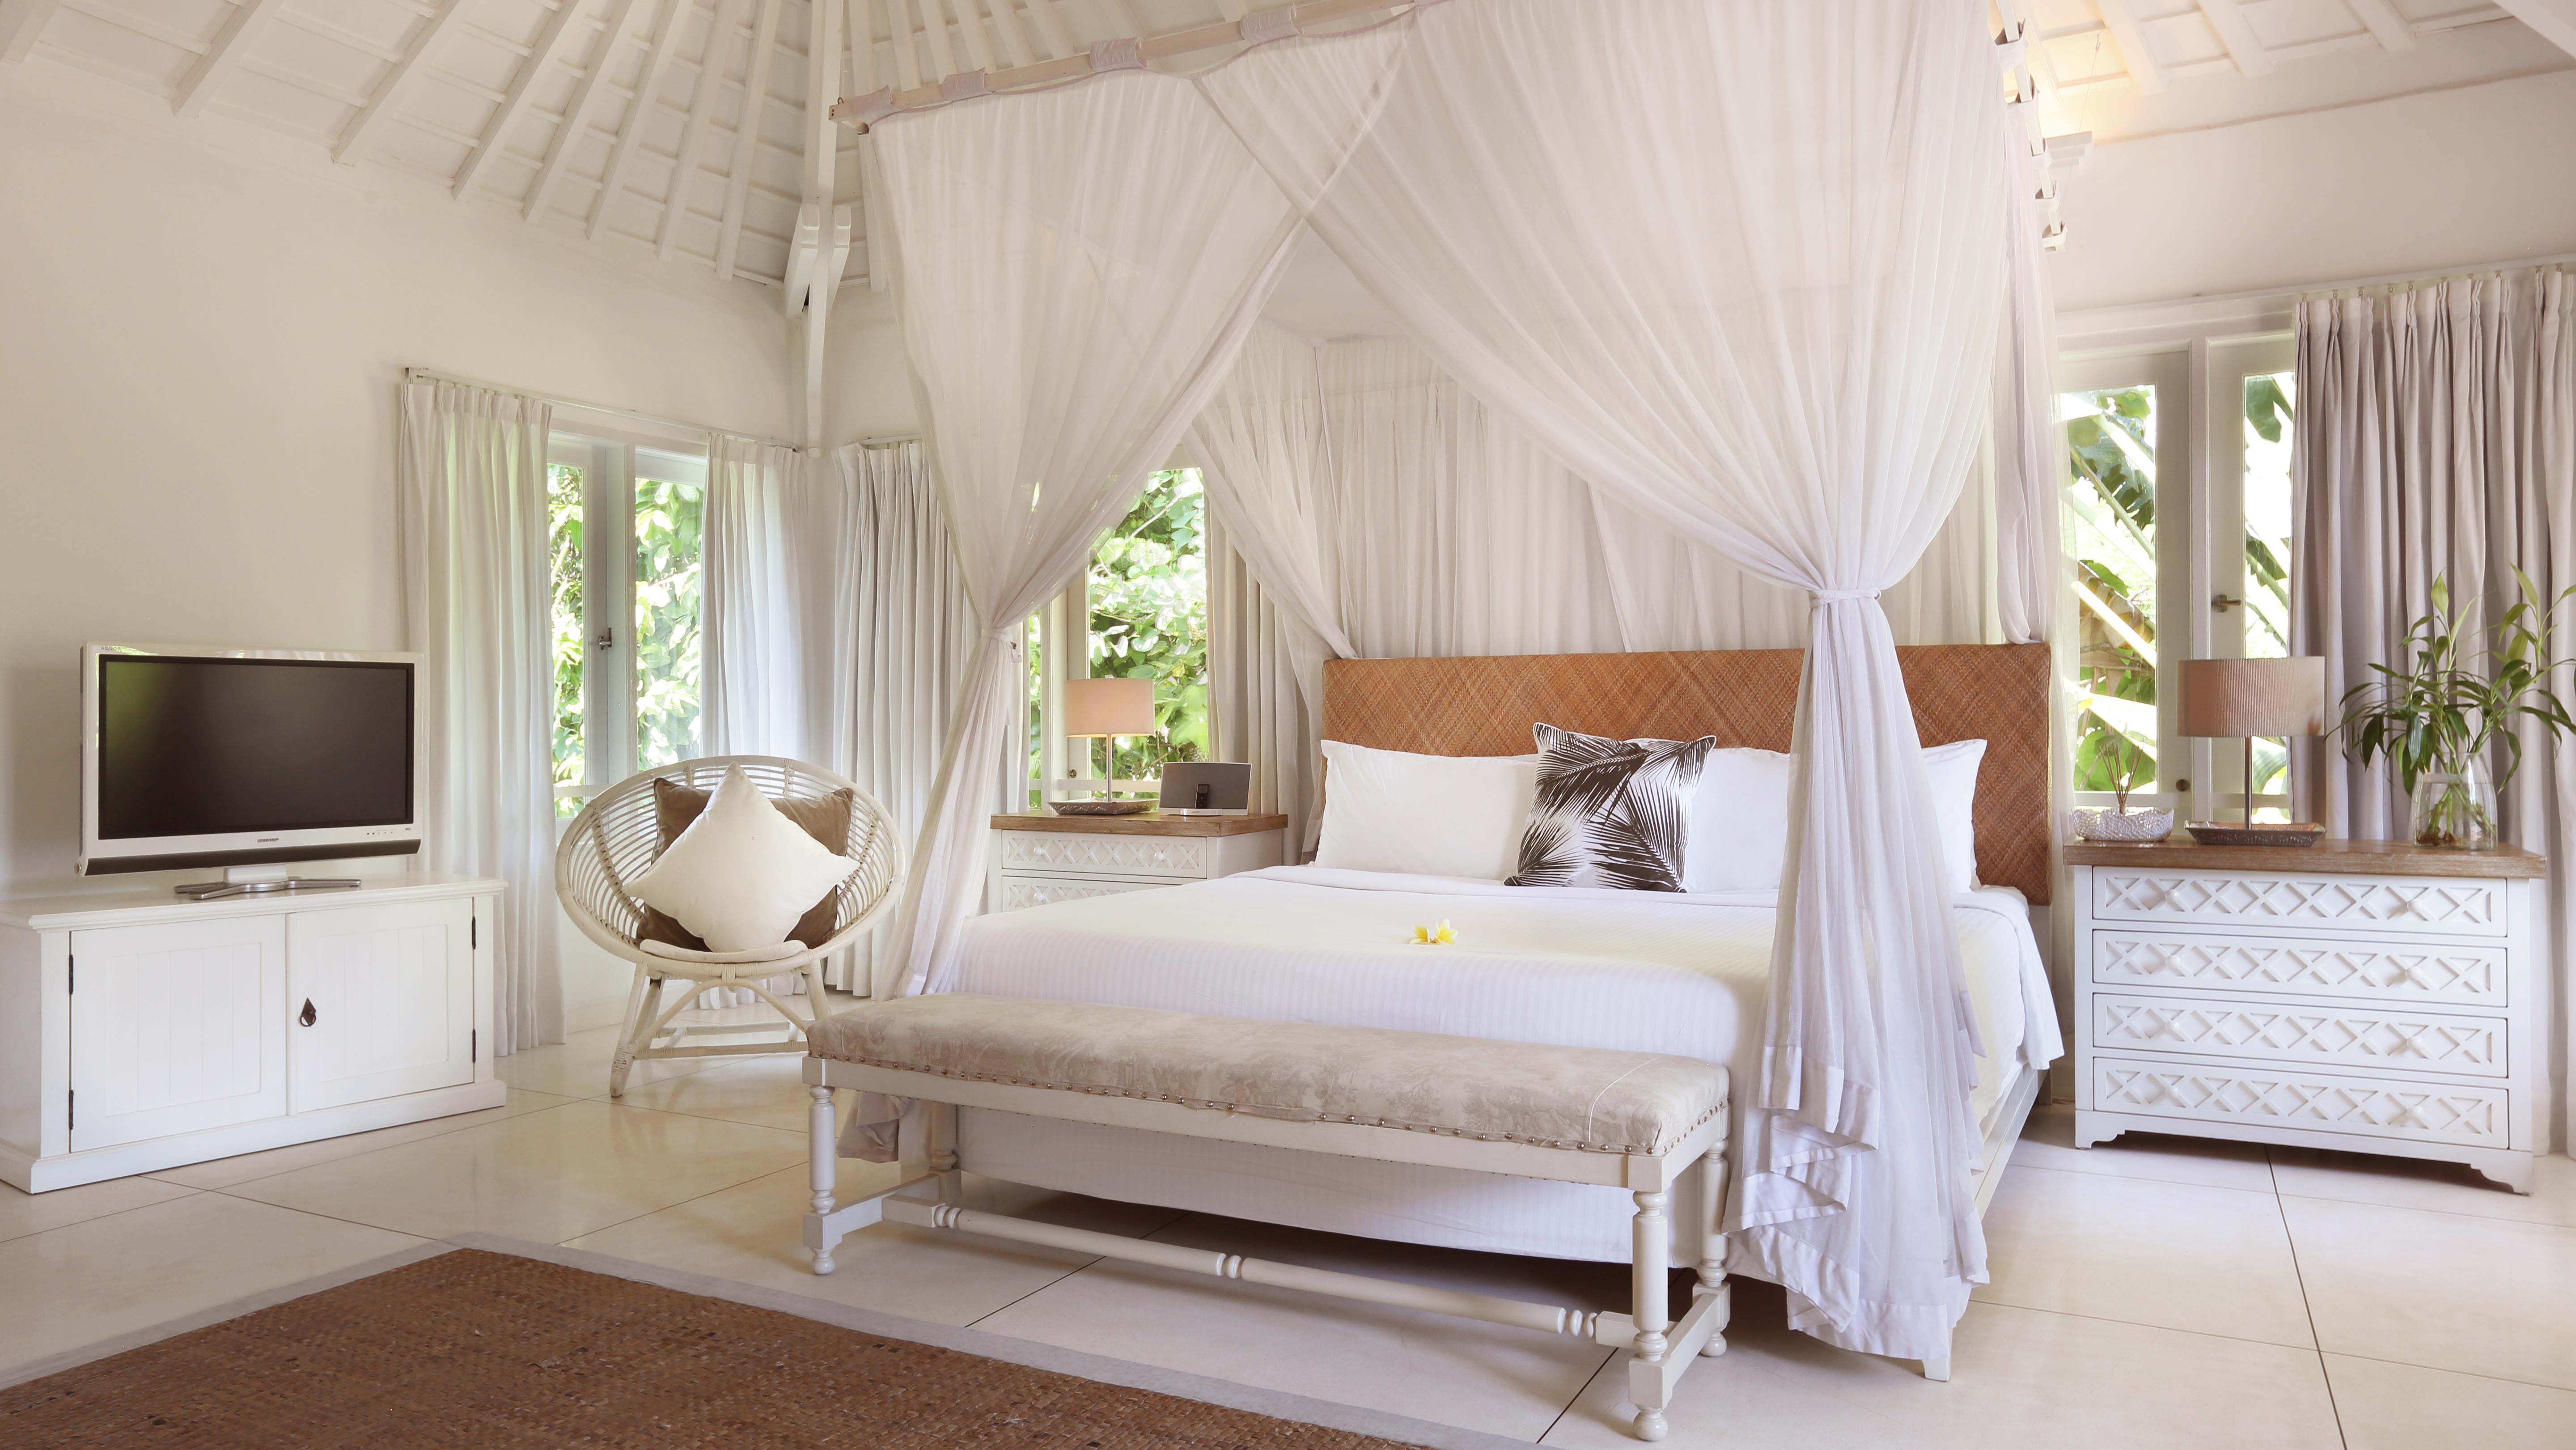 villa hermosa bedroom furniture